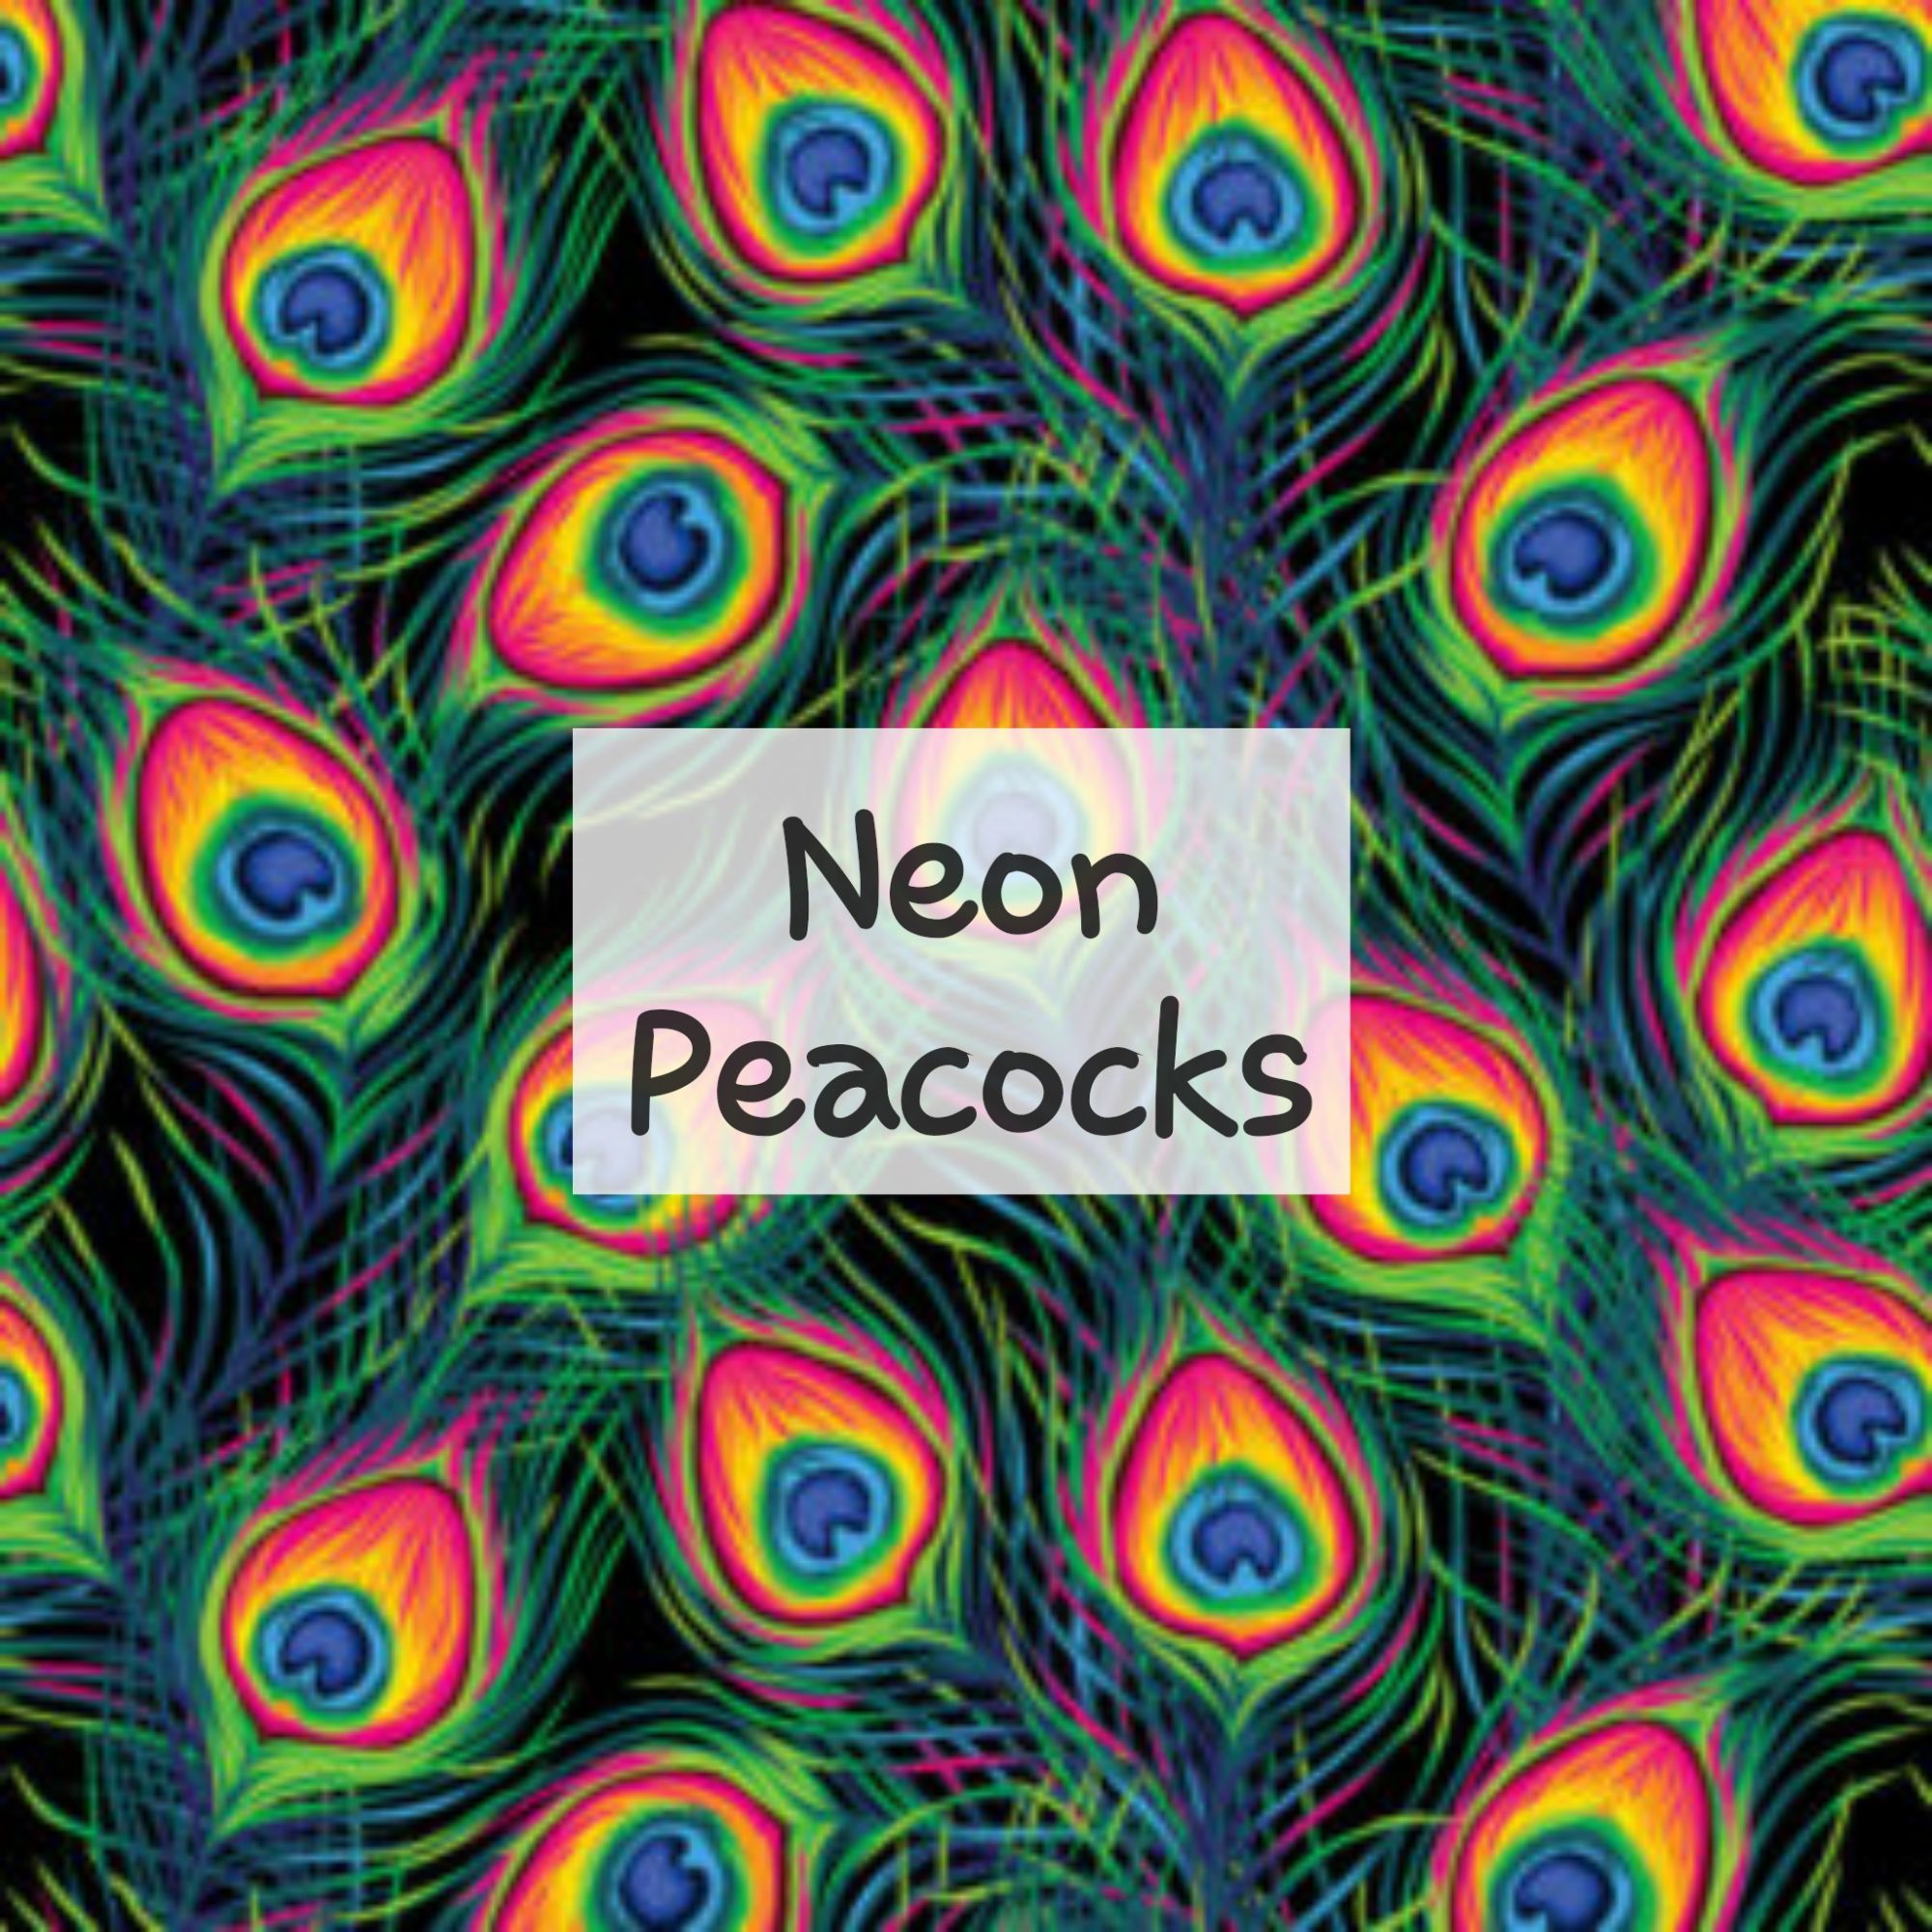 Neon Peacocks